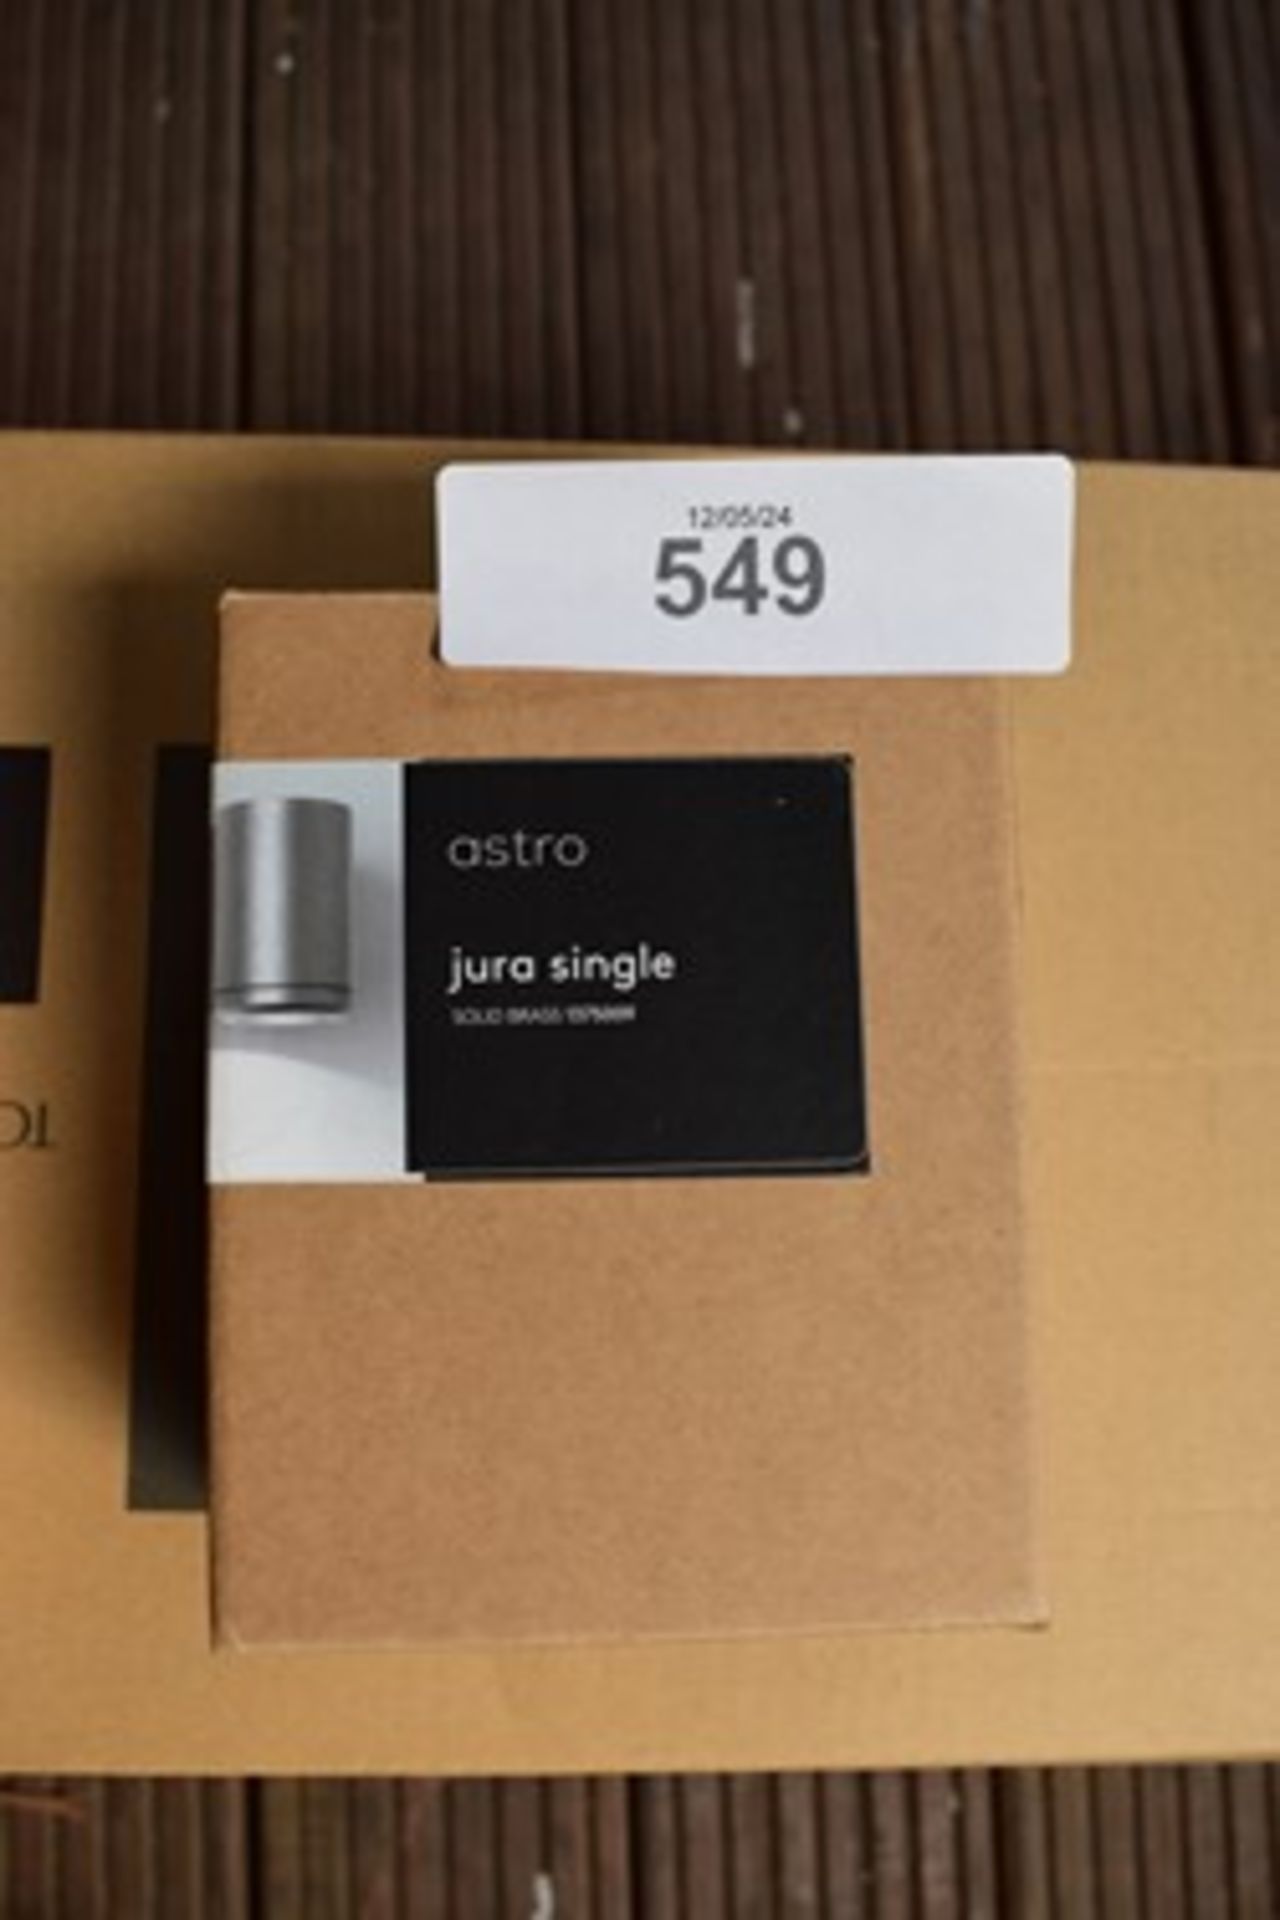 2 x Astro Jura single solid brass lights, code 1375009, EAN 5038856118940 - New in box (ES17)